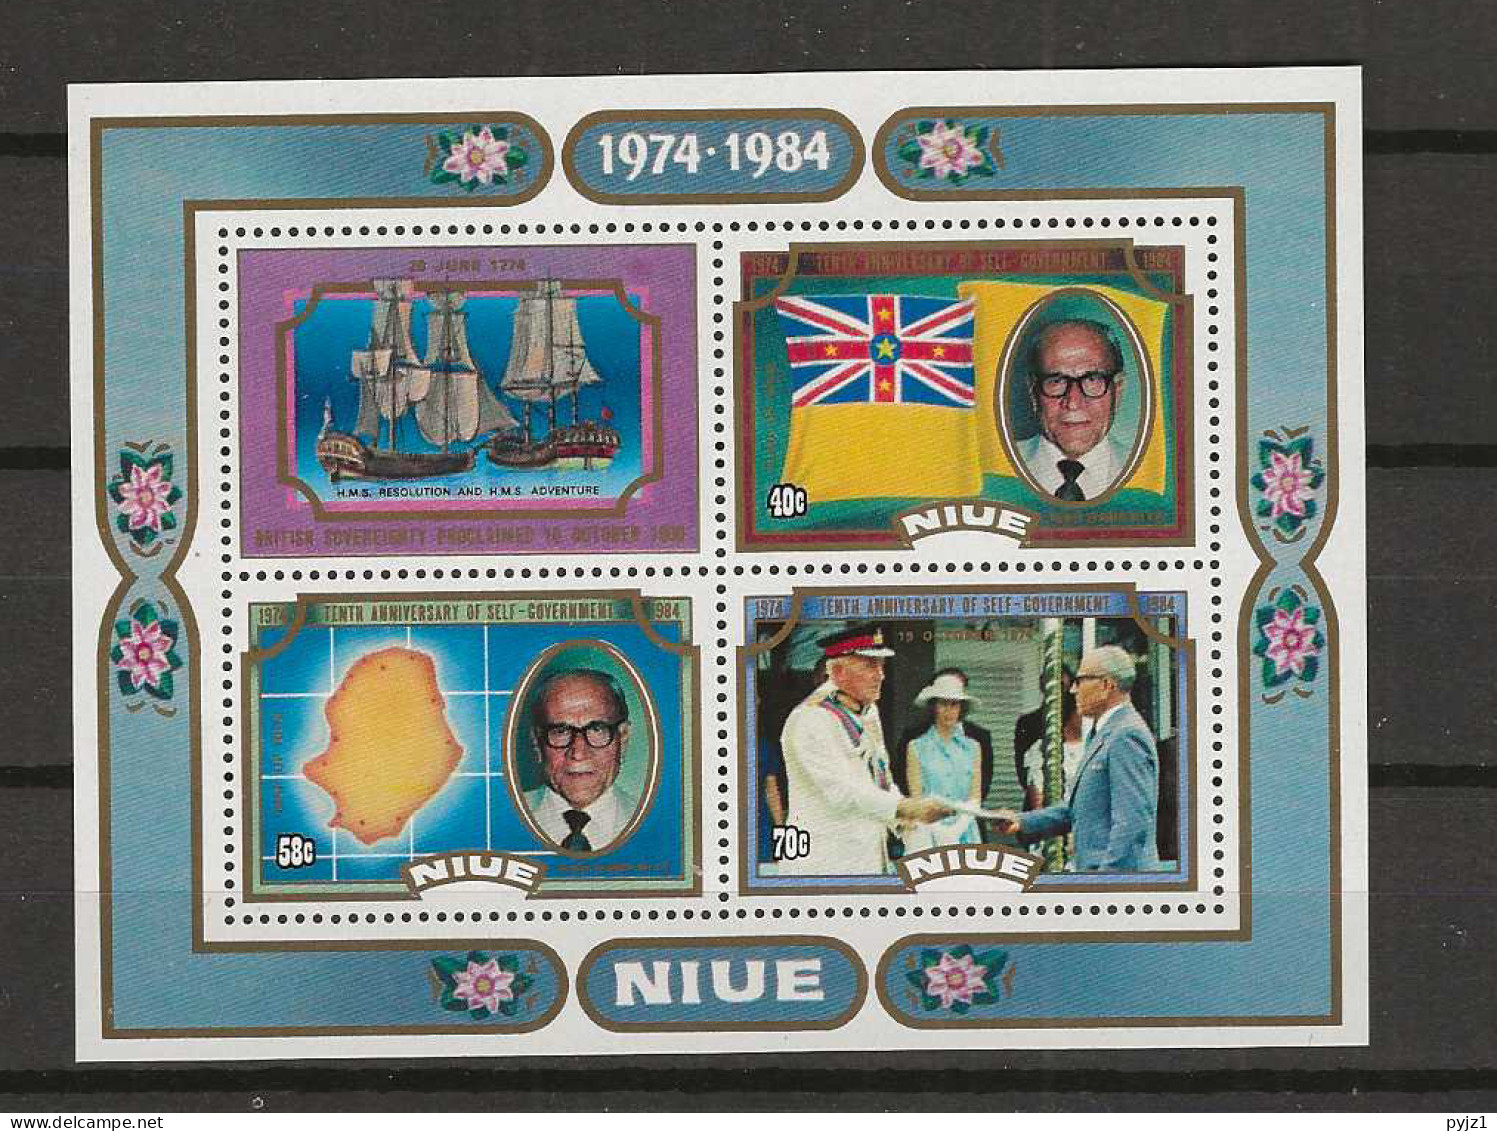 1984 MNH Niue Mi Block 77 - Niue